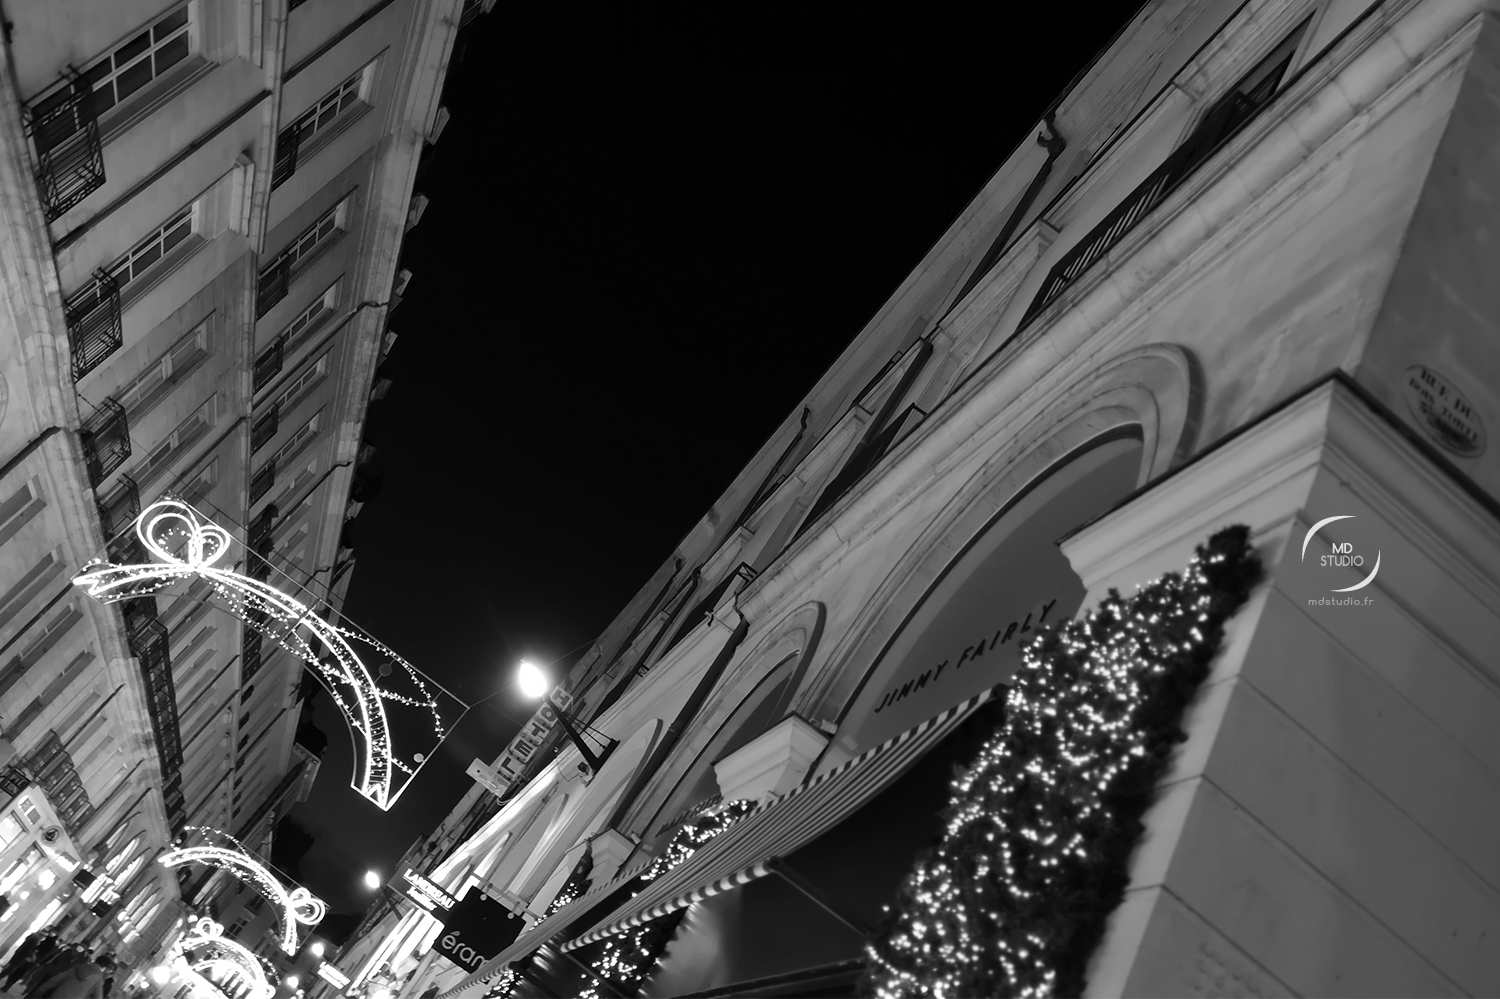 rue Nantaise - illuminations et décorations de Noël 2020 | photo MDstudio